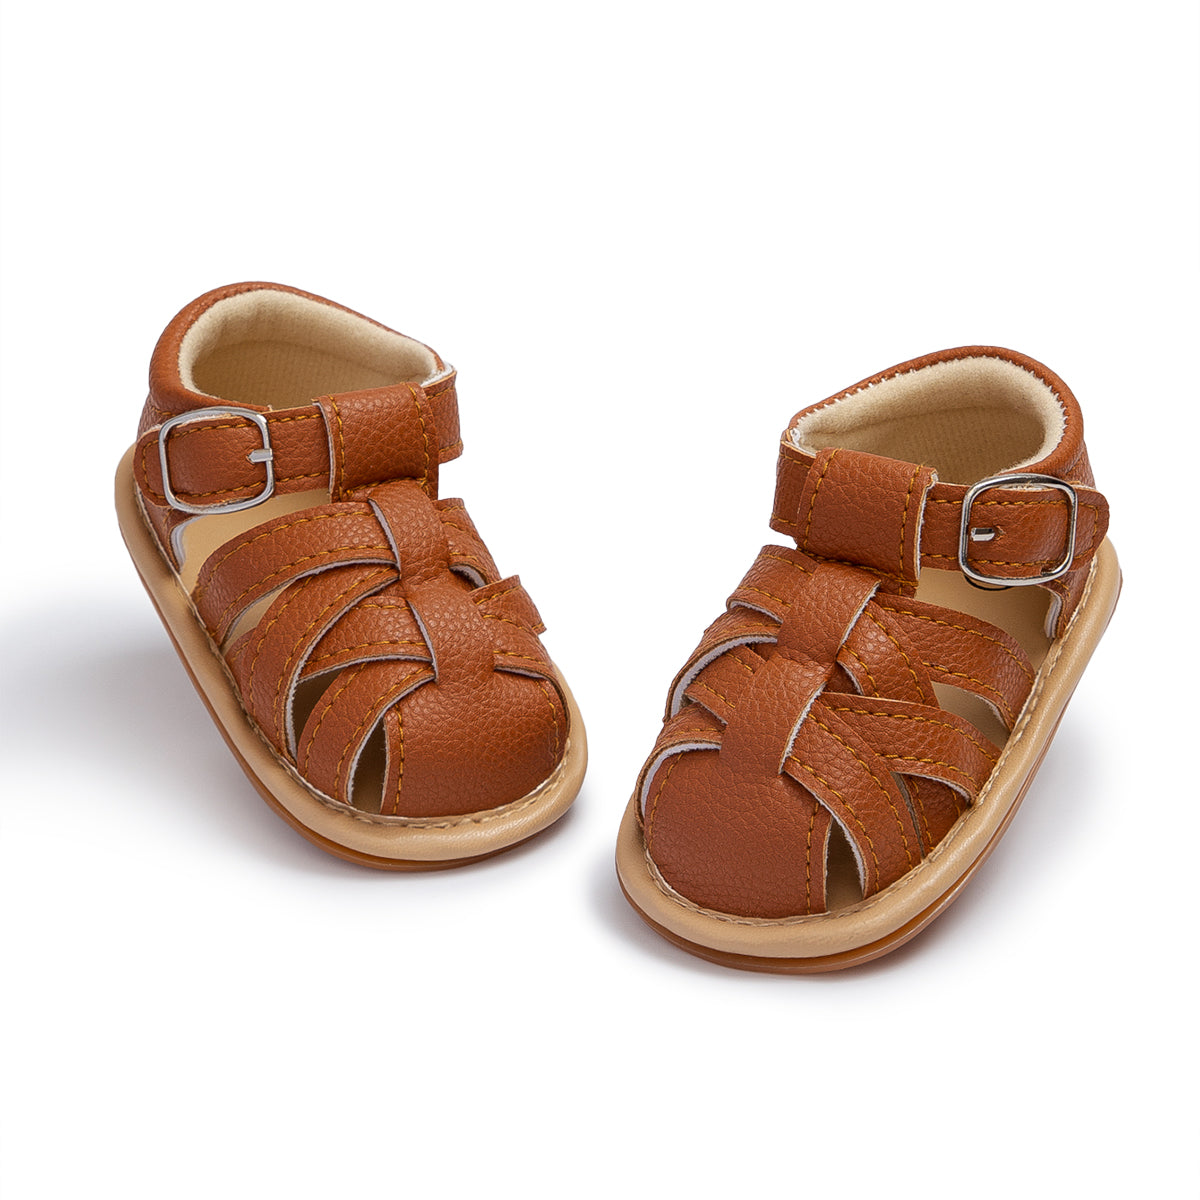 Baby summer Sandals - Tan